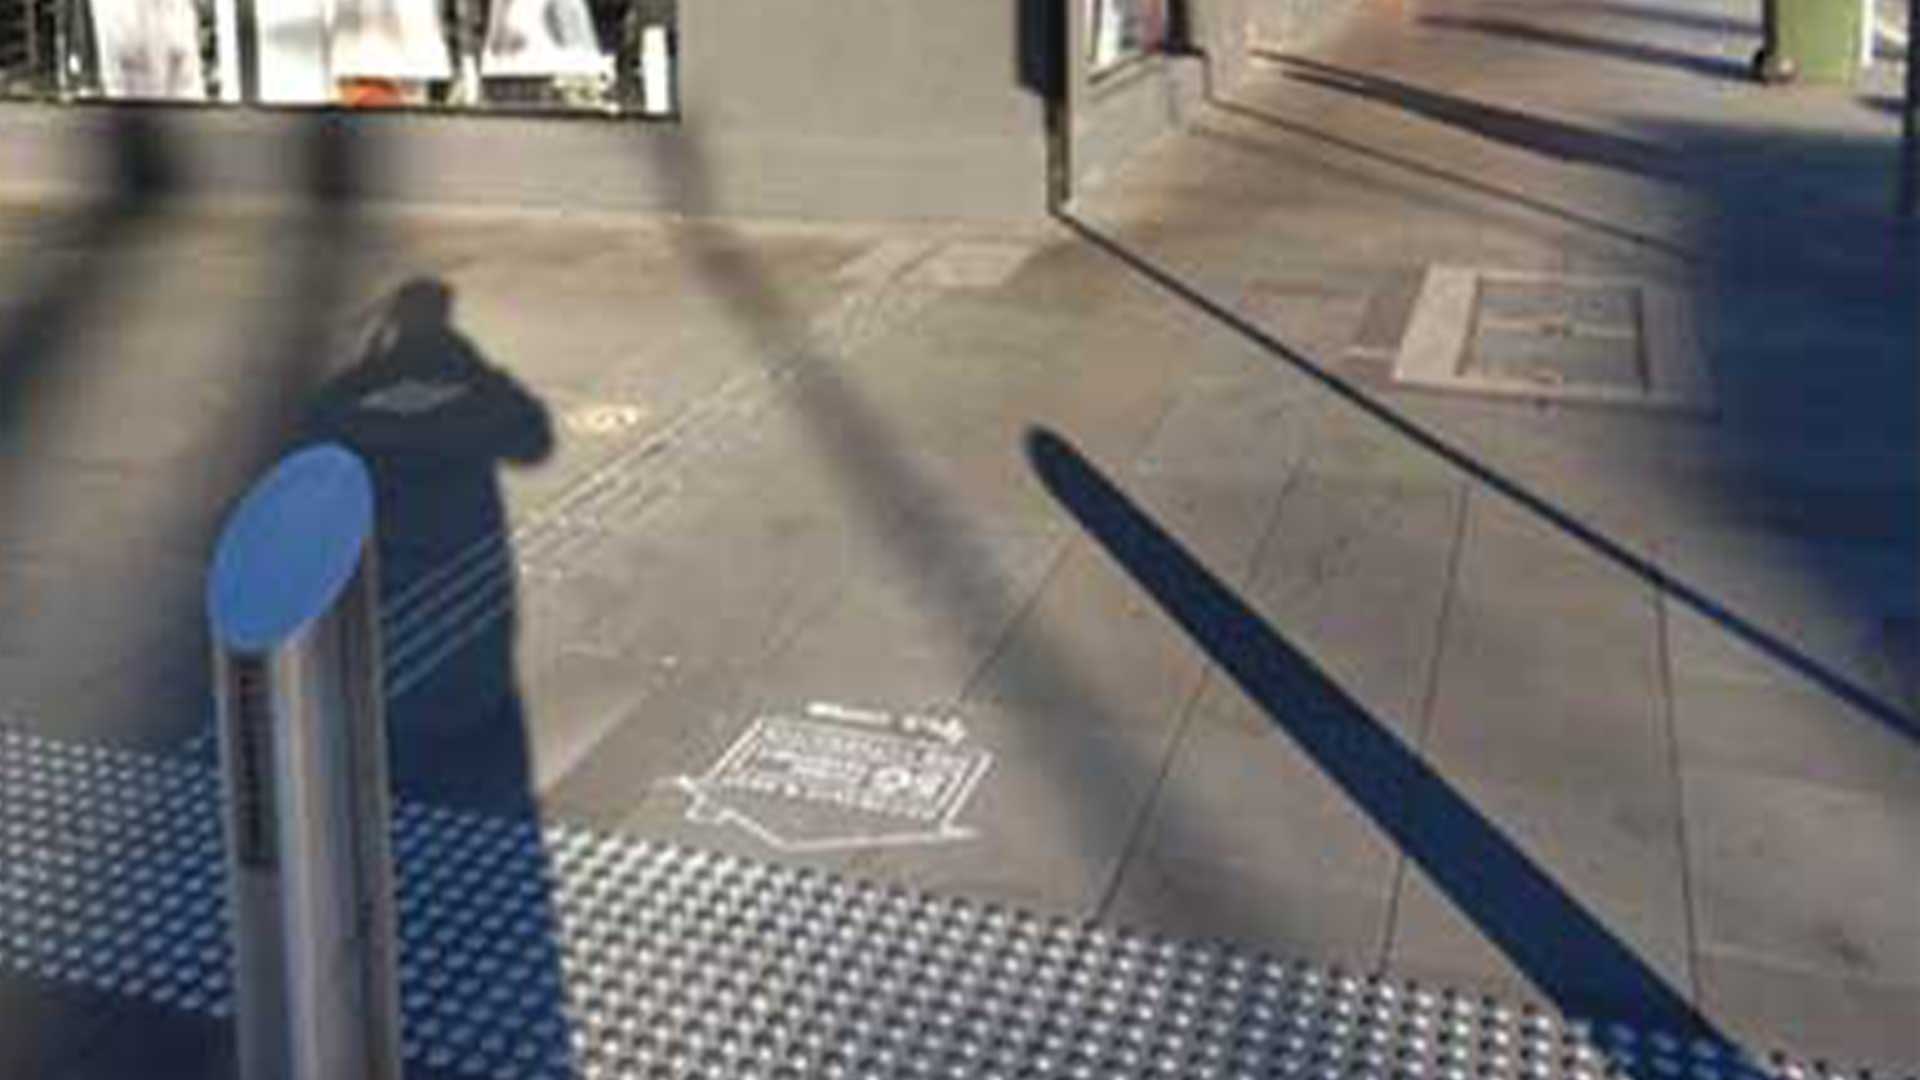 chalk advertising on sidewalk